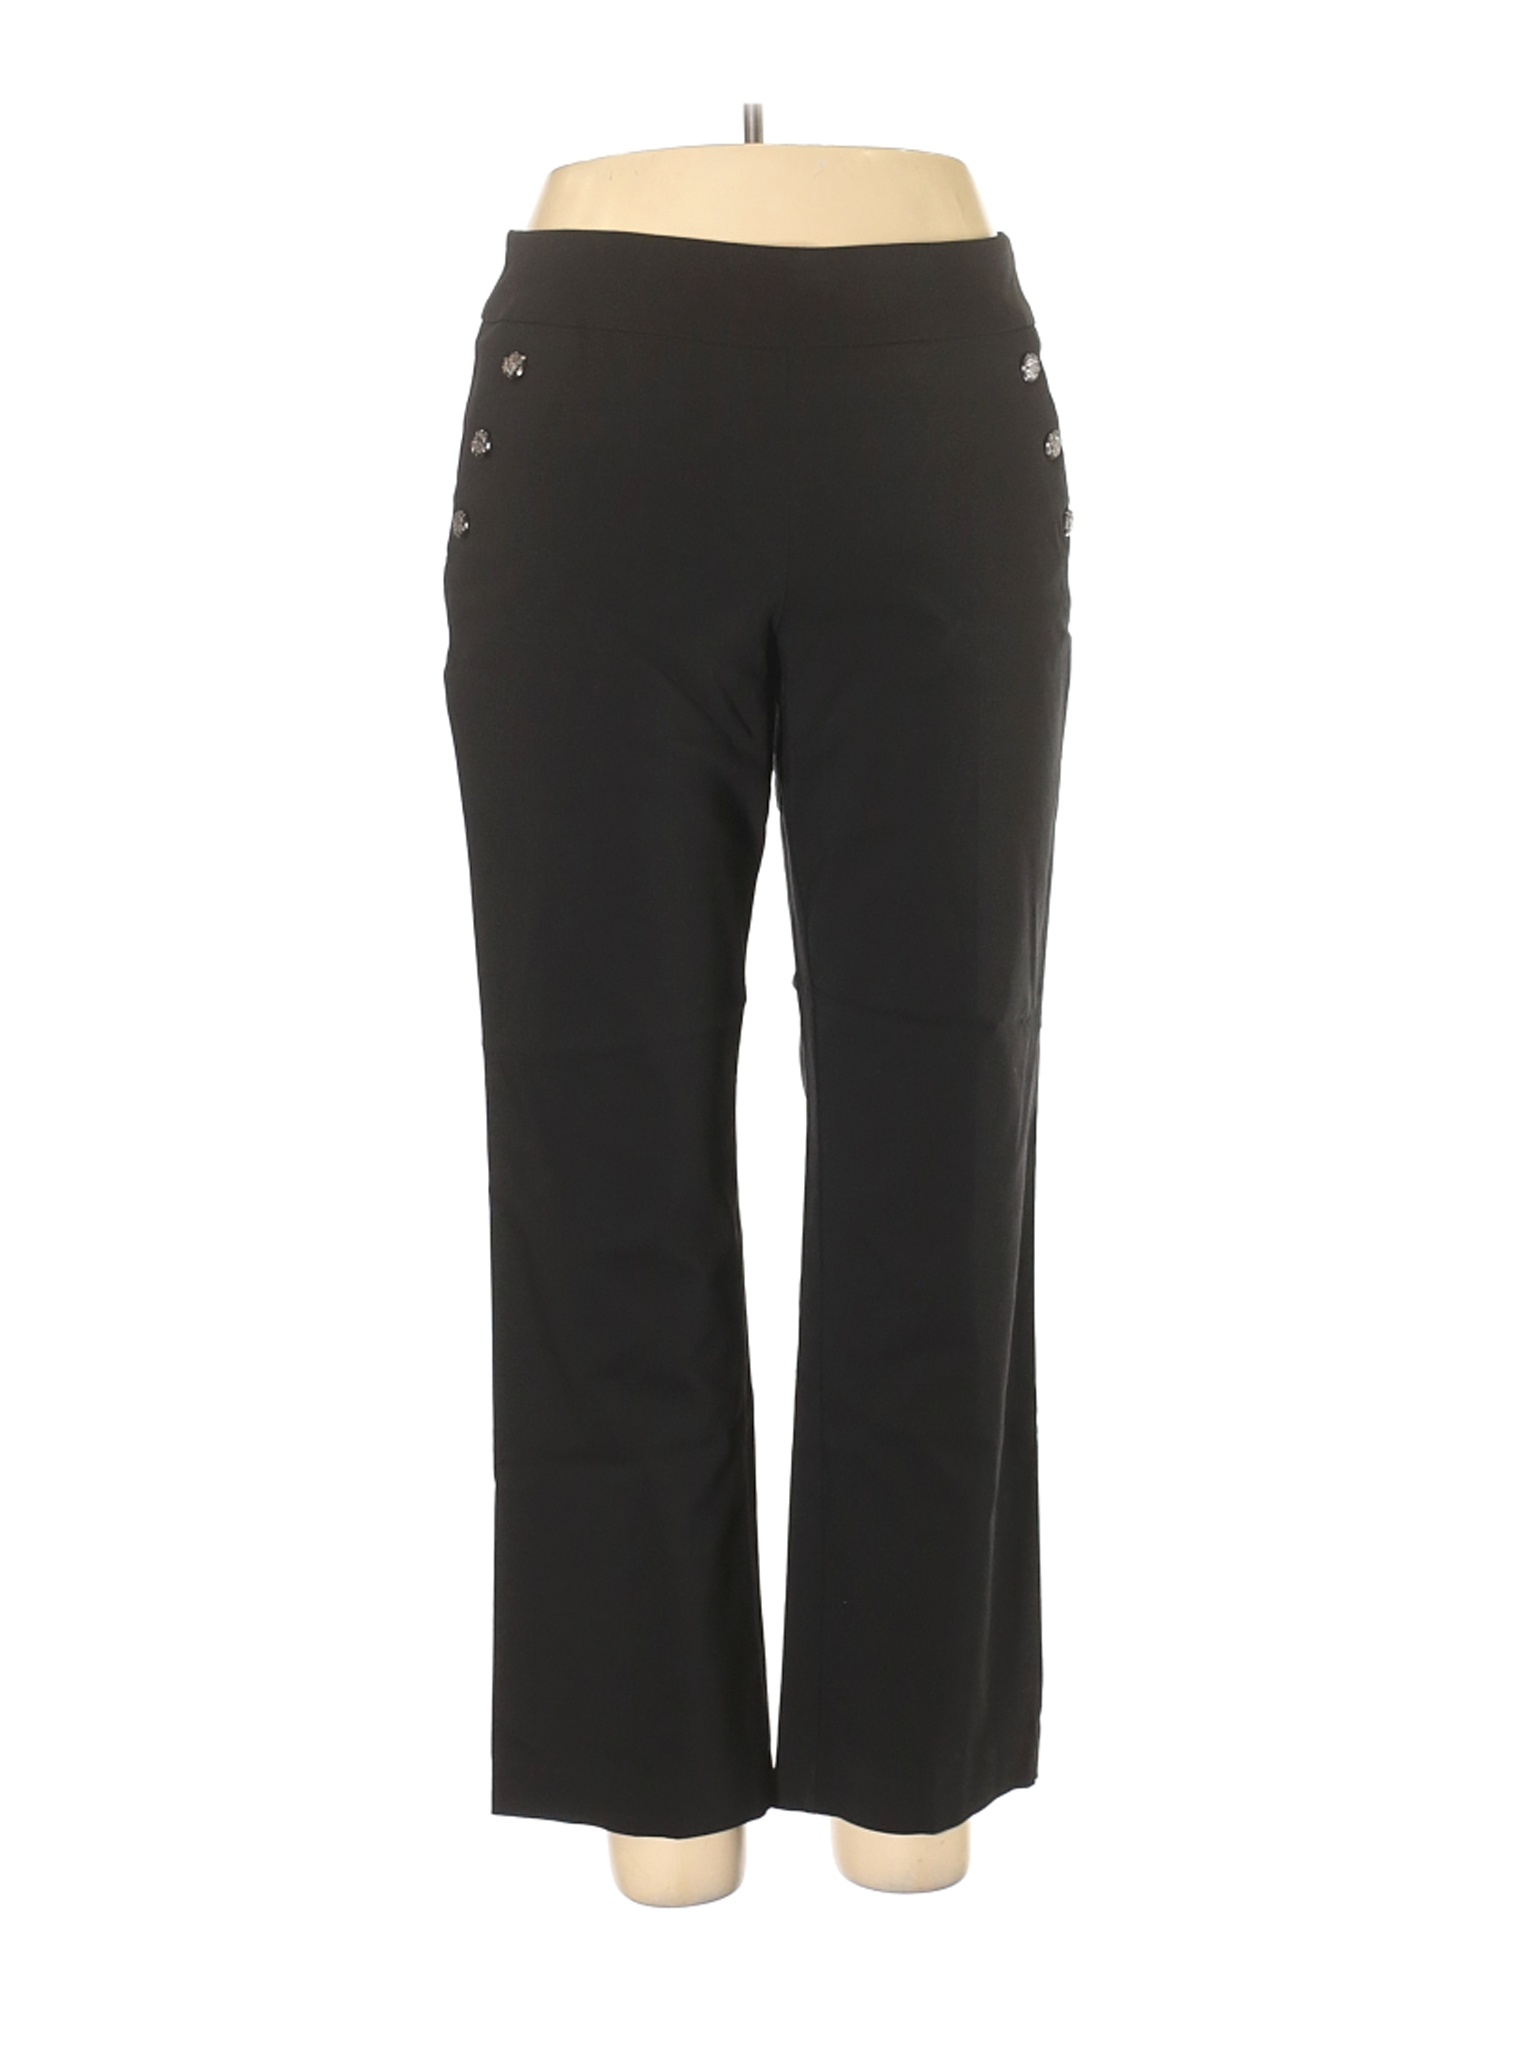 Roz & Ali Women Black Casual Pants 14 Petites | eBay